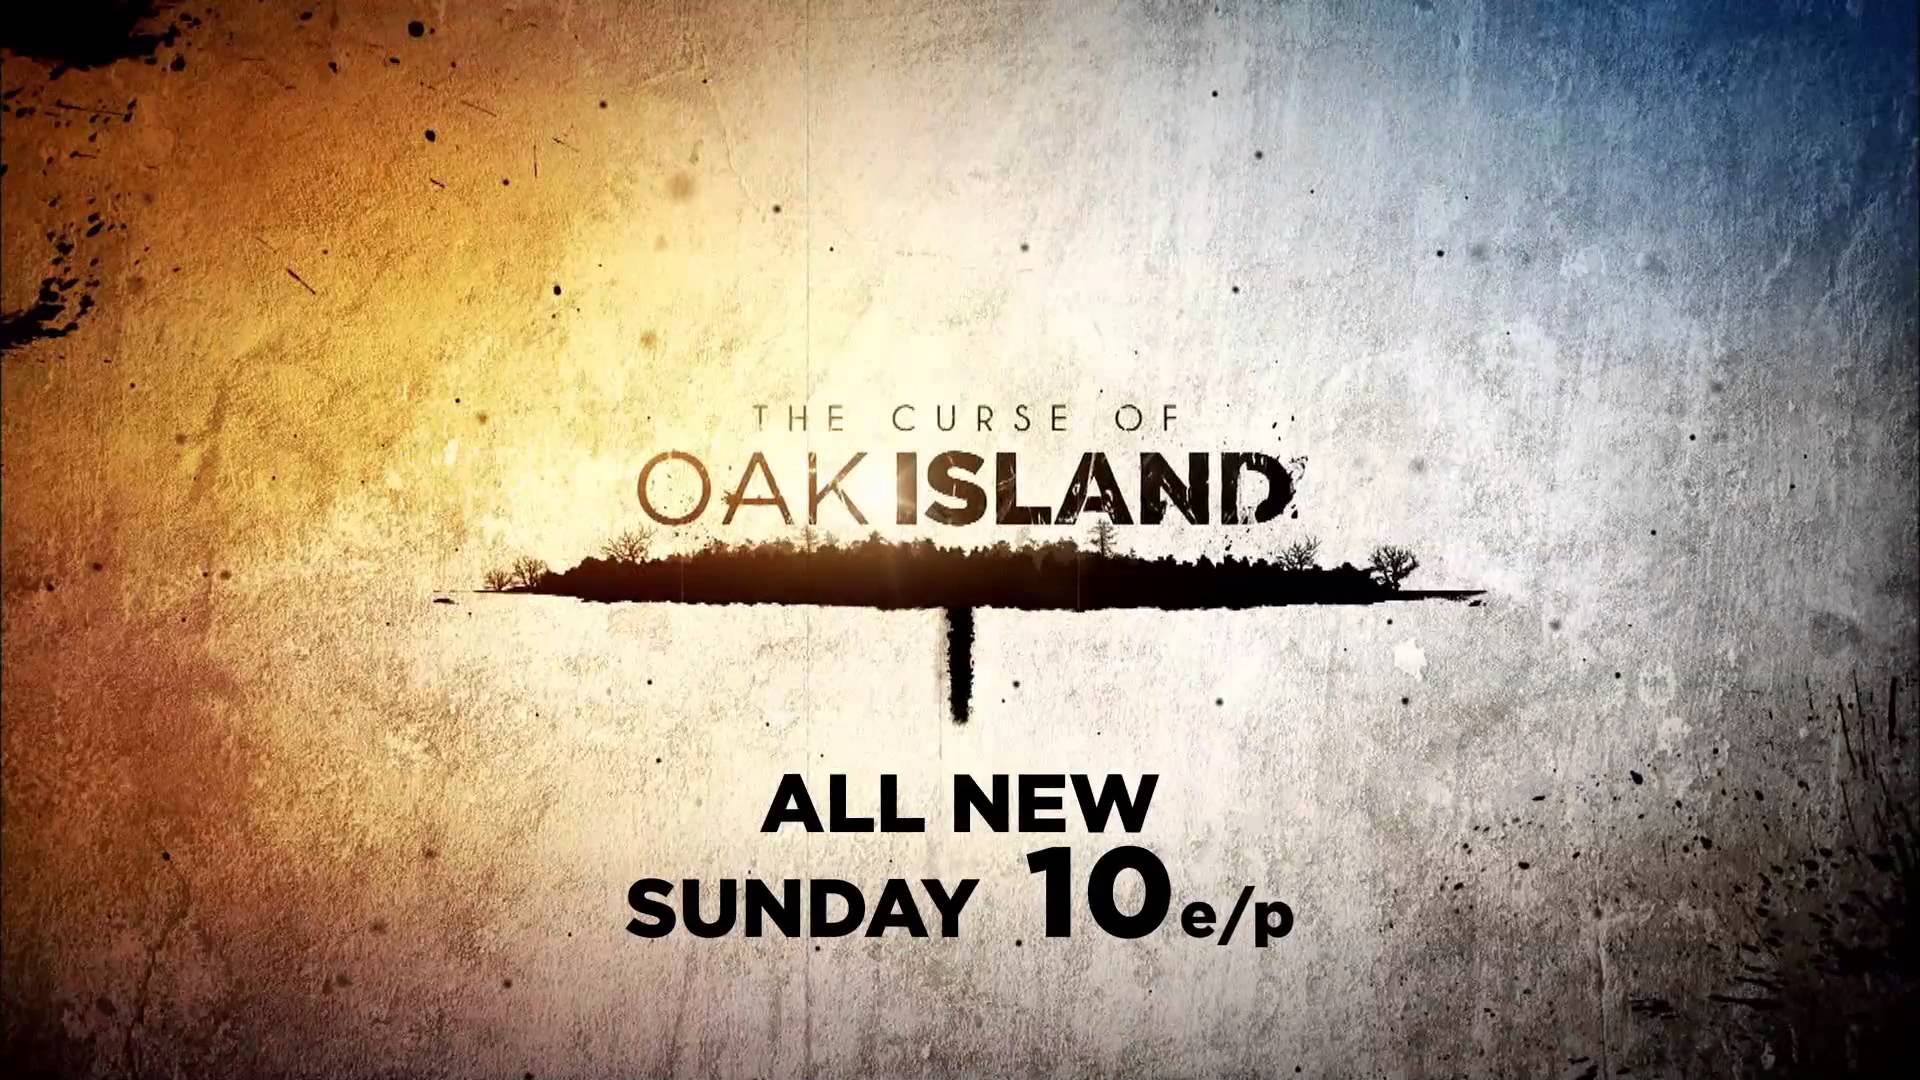 The Curse Of Oak Island Airs Sunday Nights At 10 E P On History